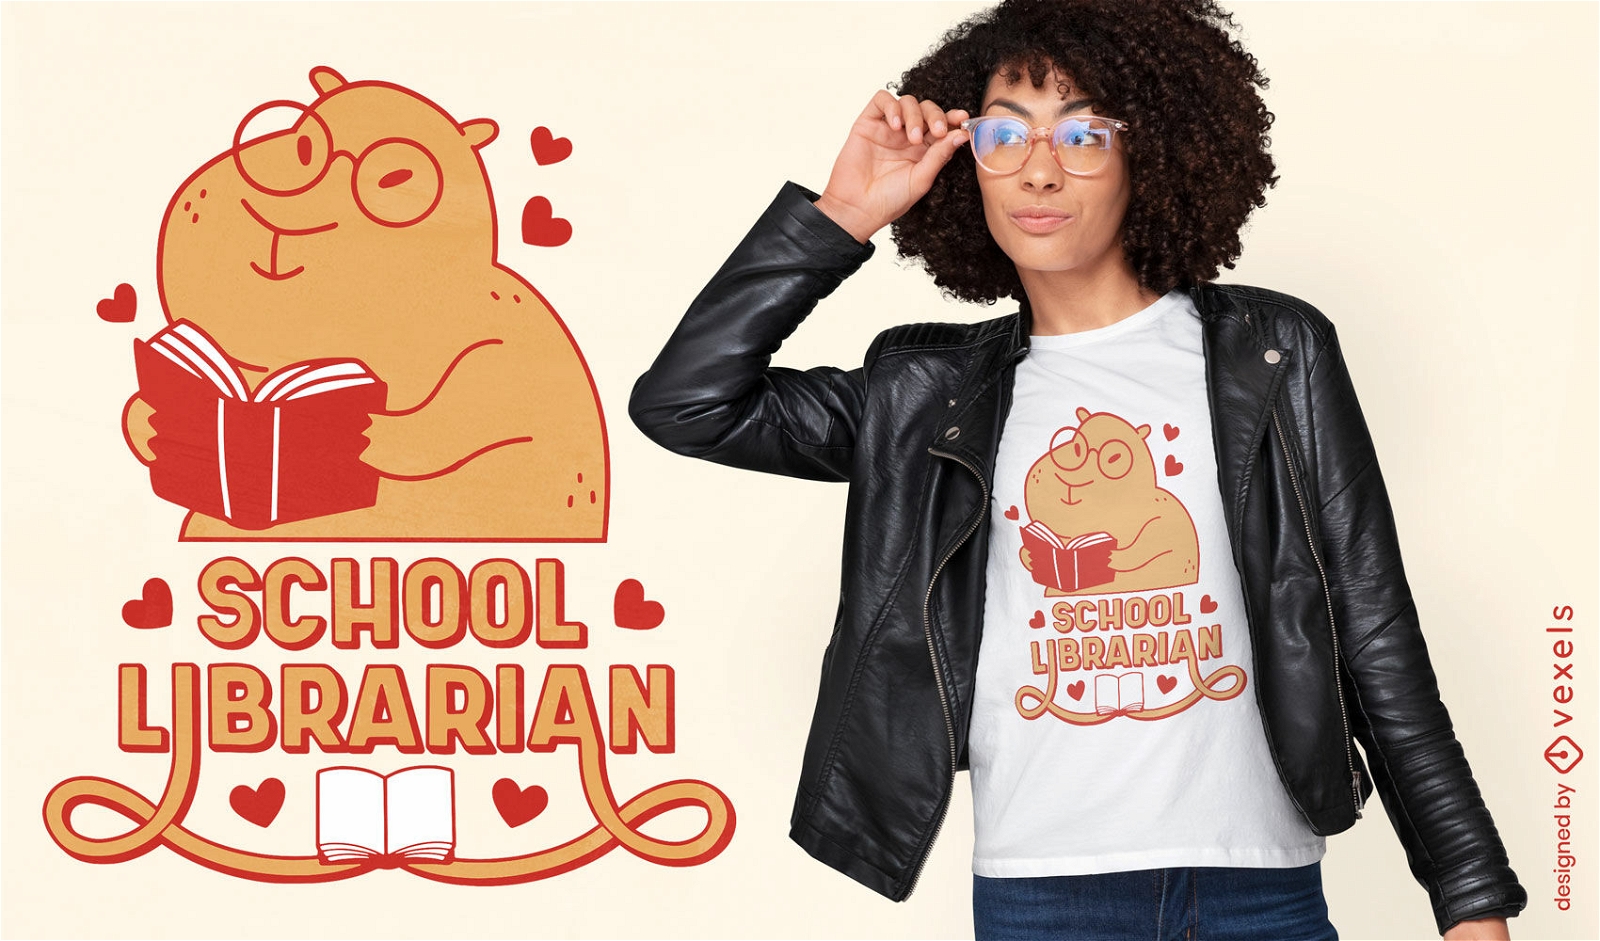 Capybara reading librarian t-shirt design